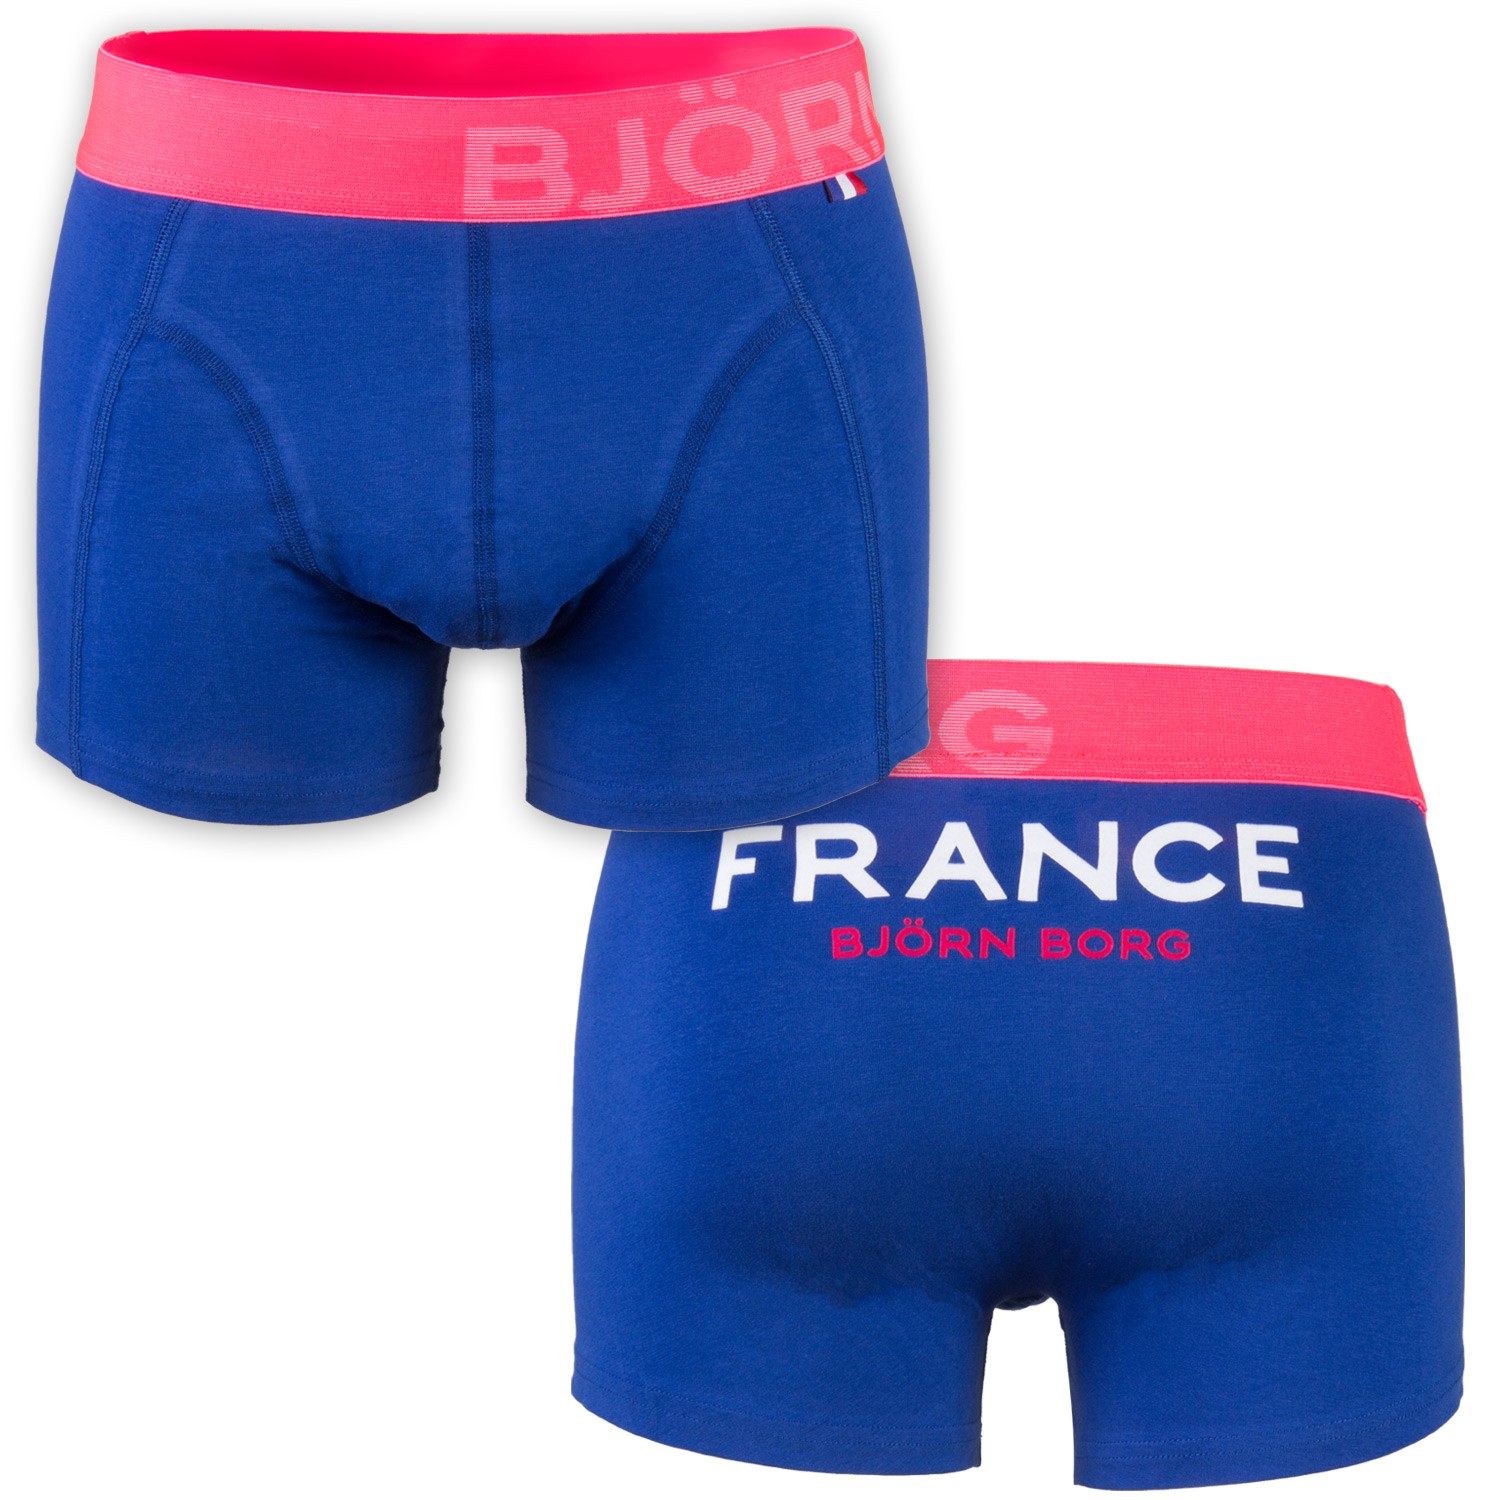 Björn Borg Short Shorts Nations France 78051